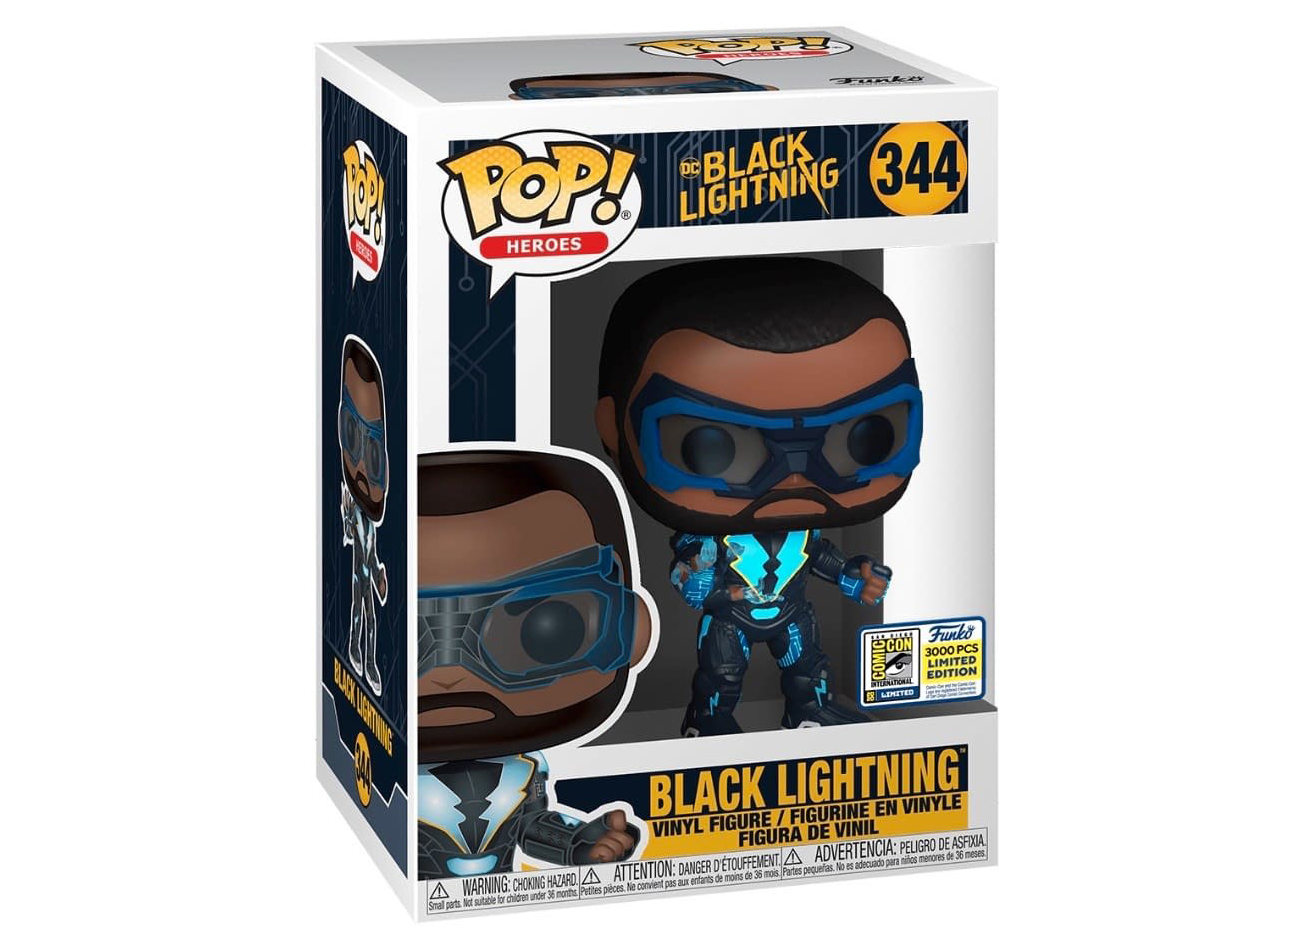 Funko Pop! Heroes Black Lightning Black Lightning SDCC Exclusive